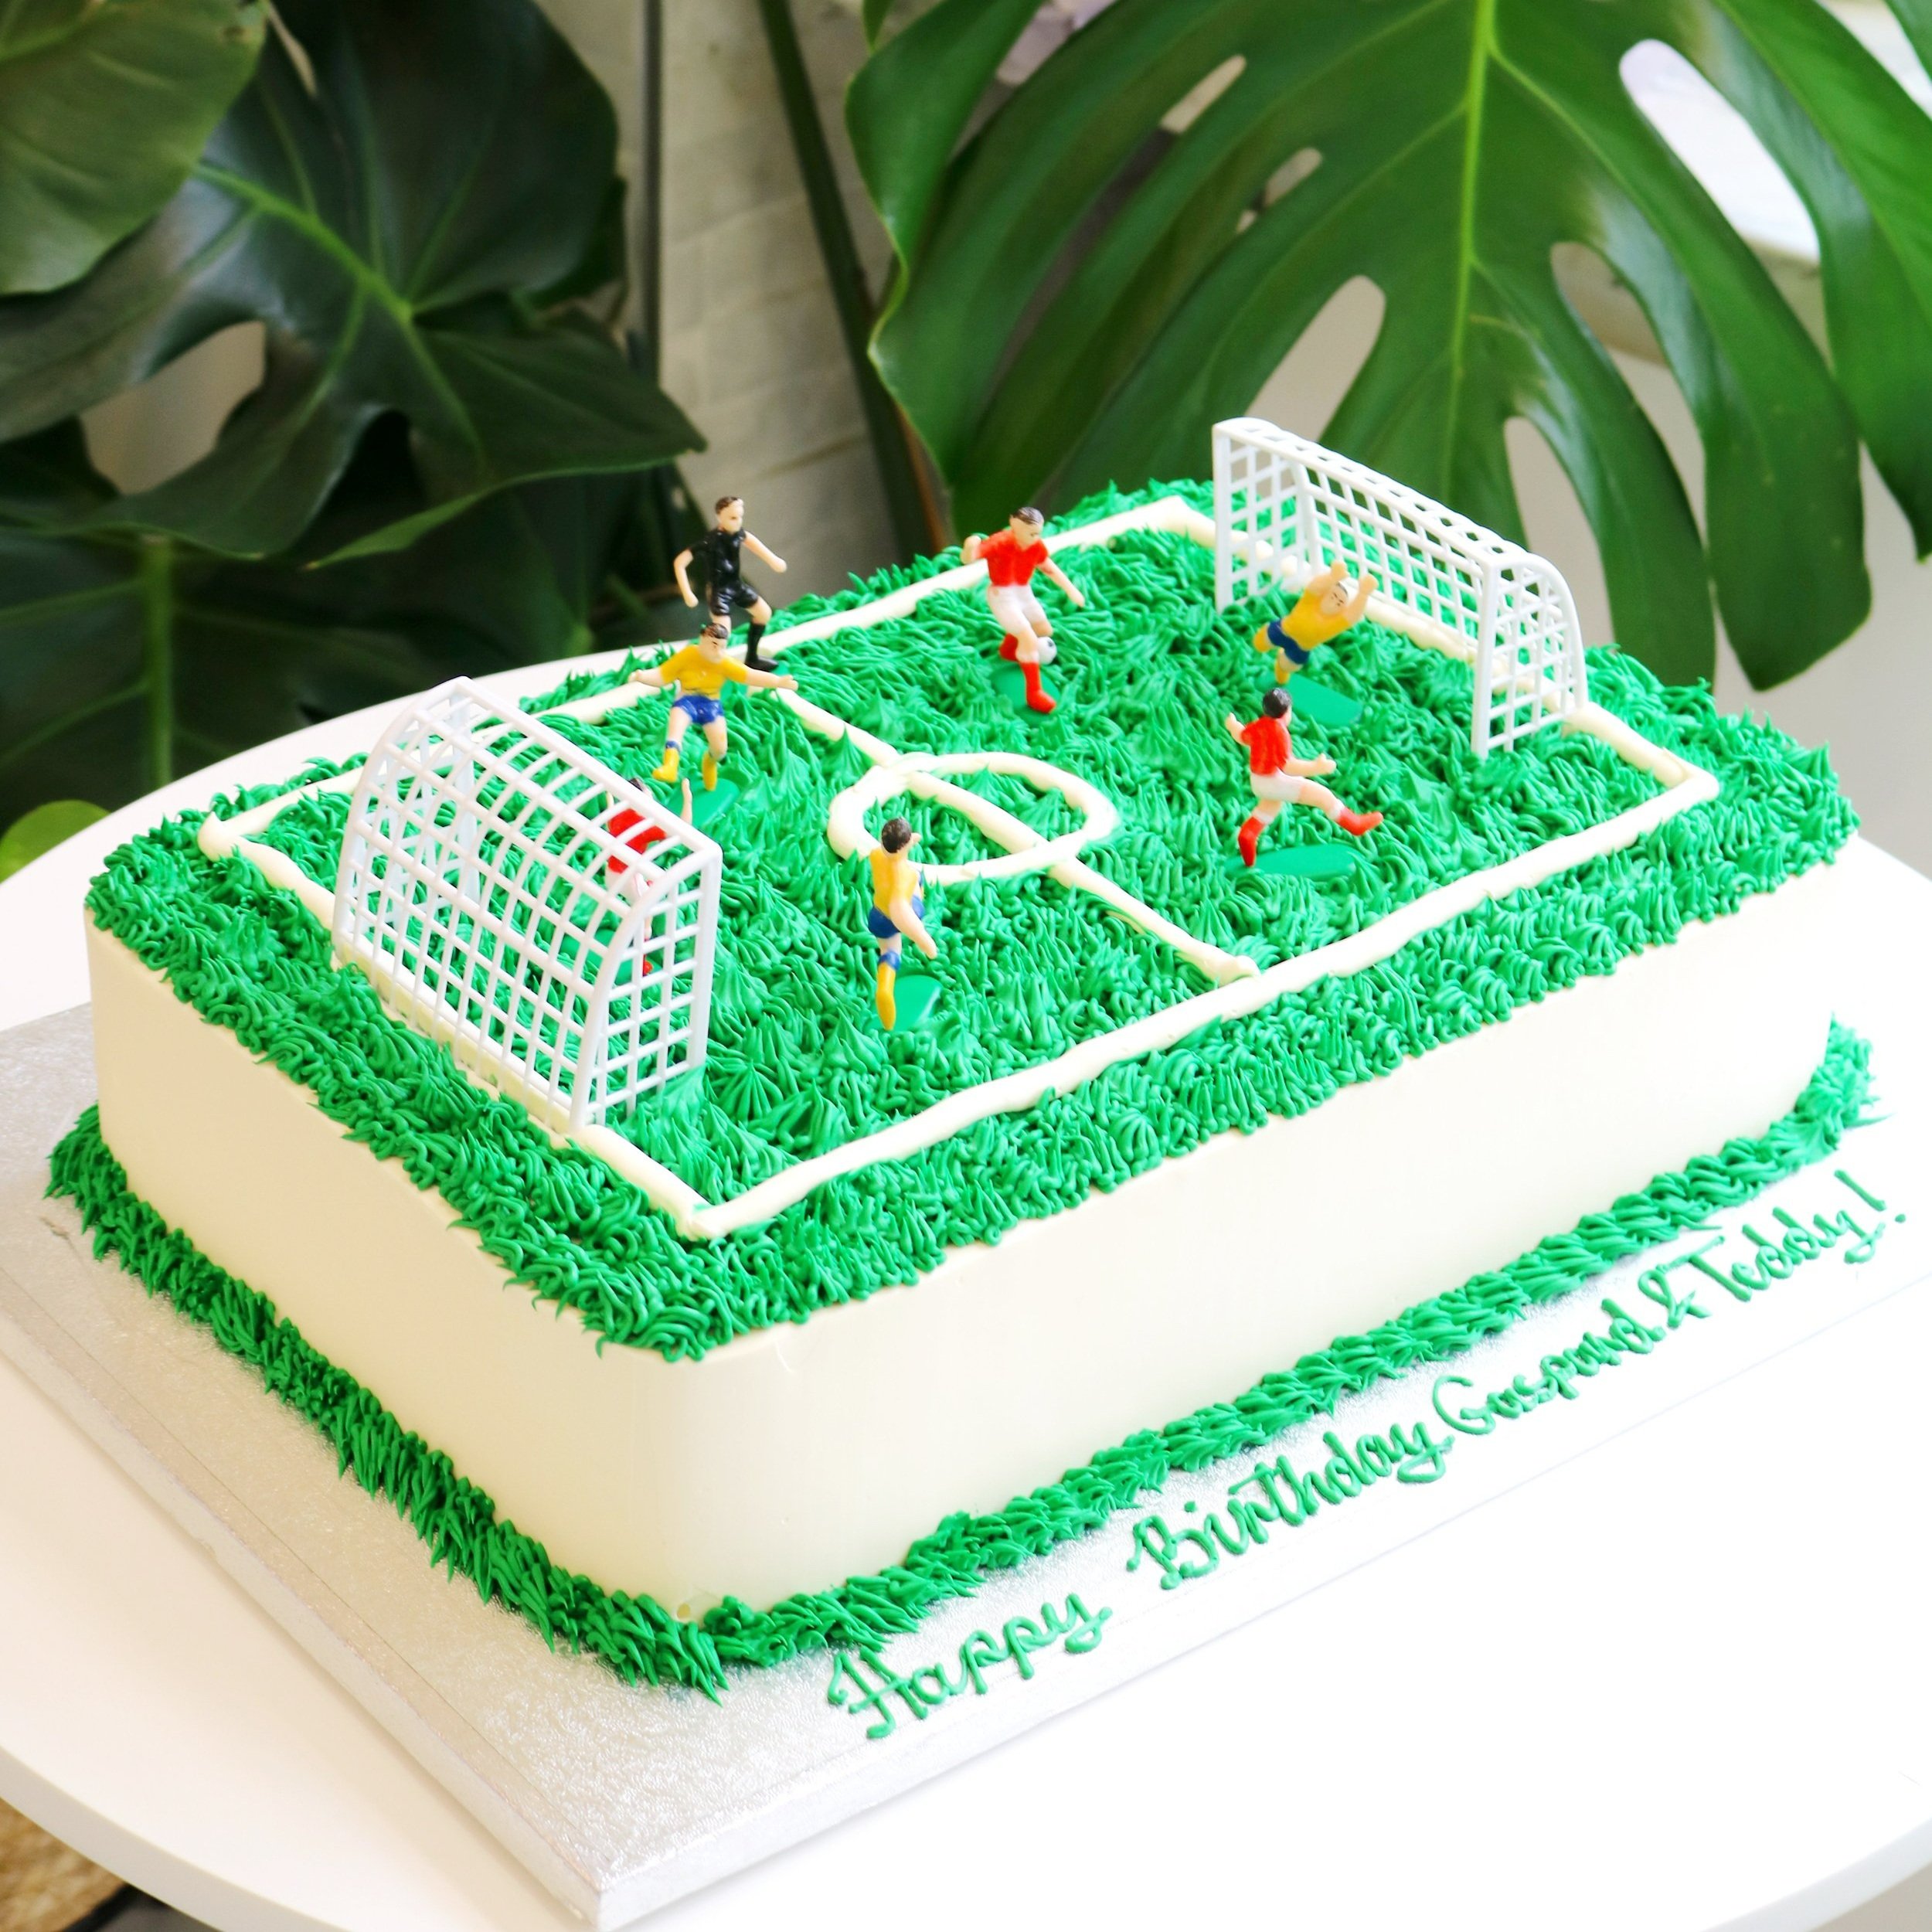 Football Cake - Happie Returns